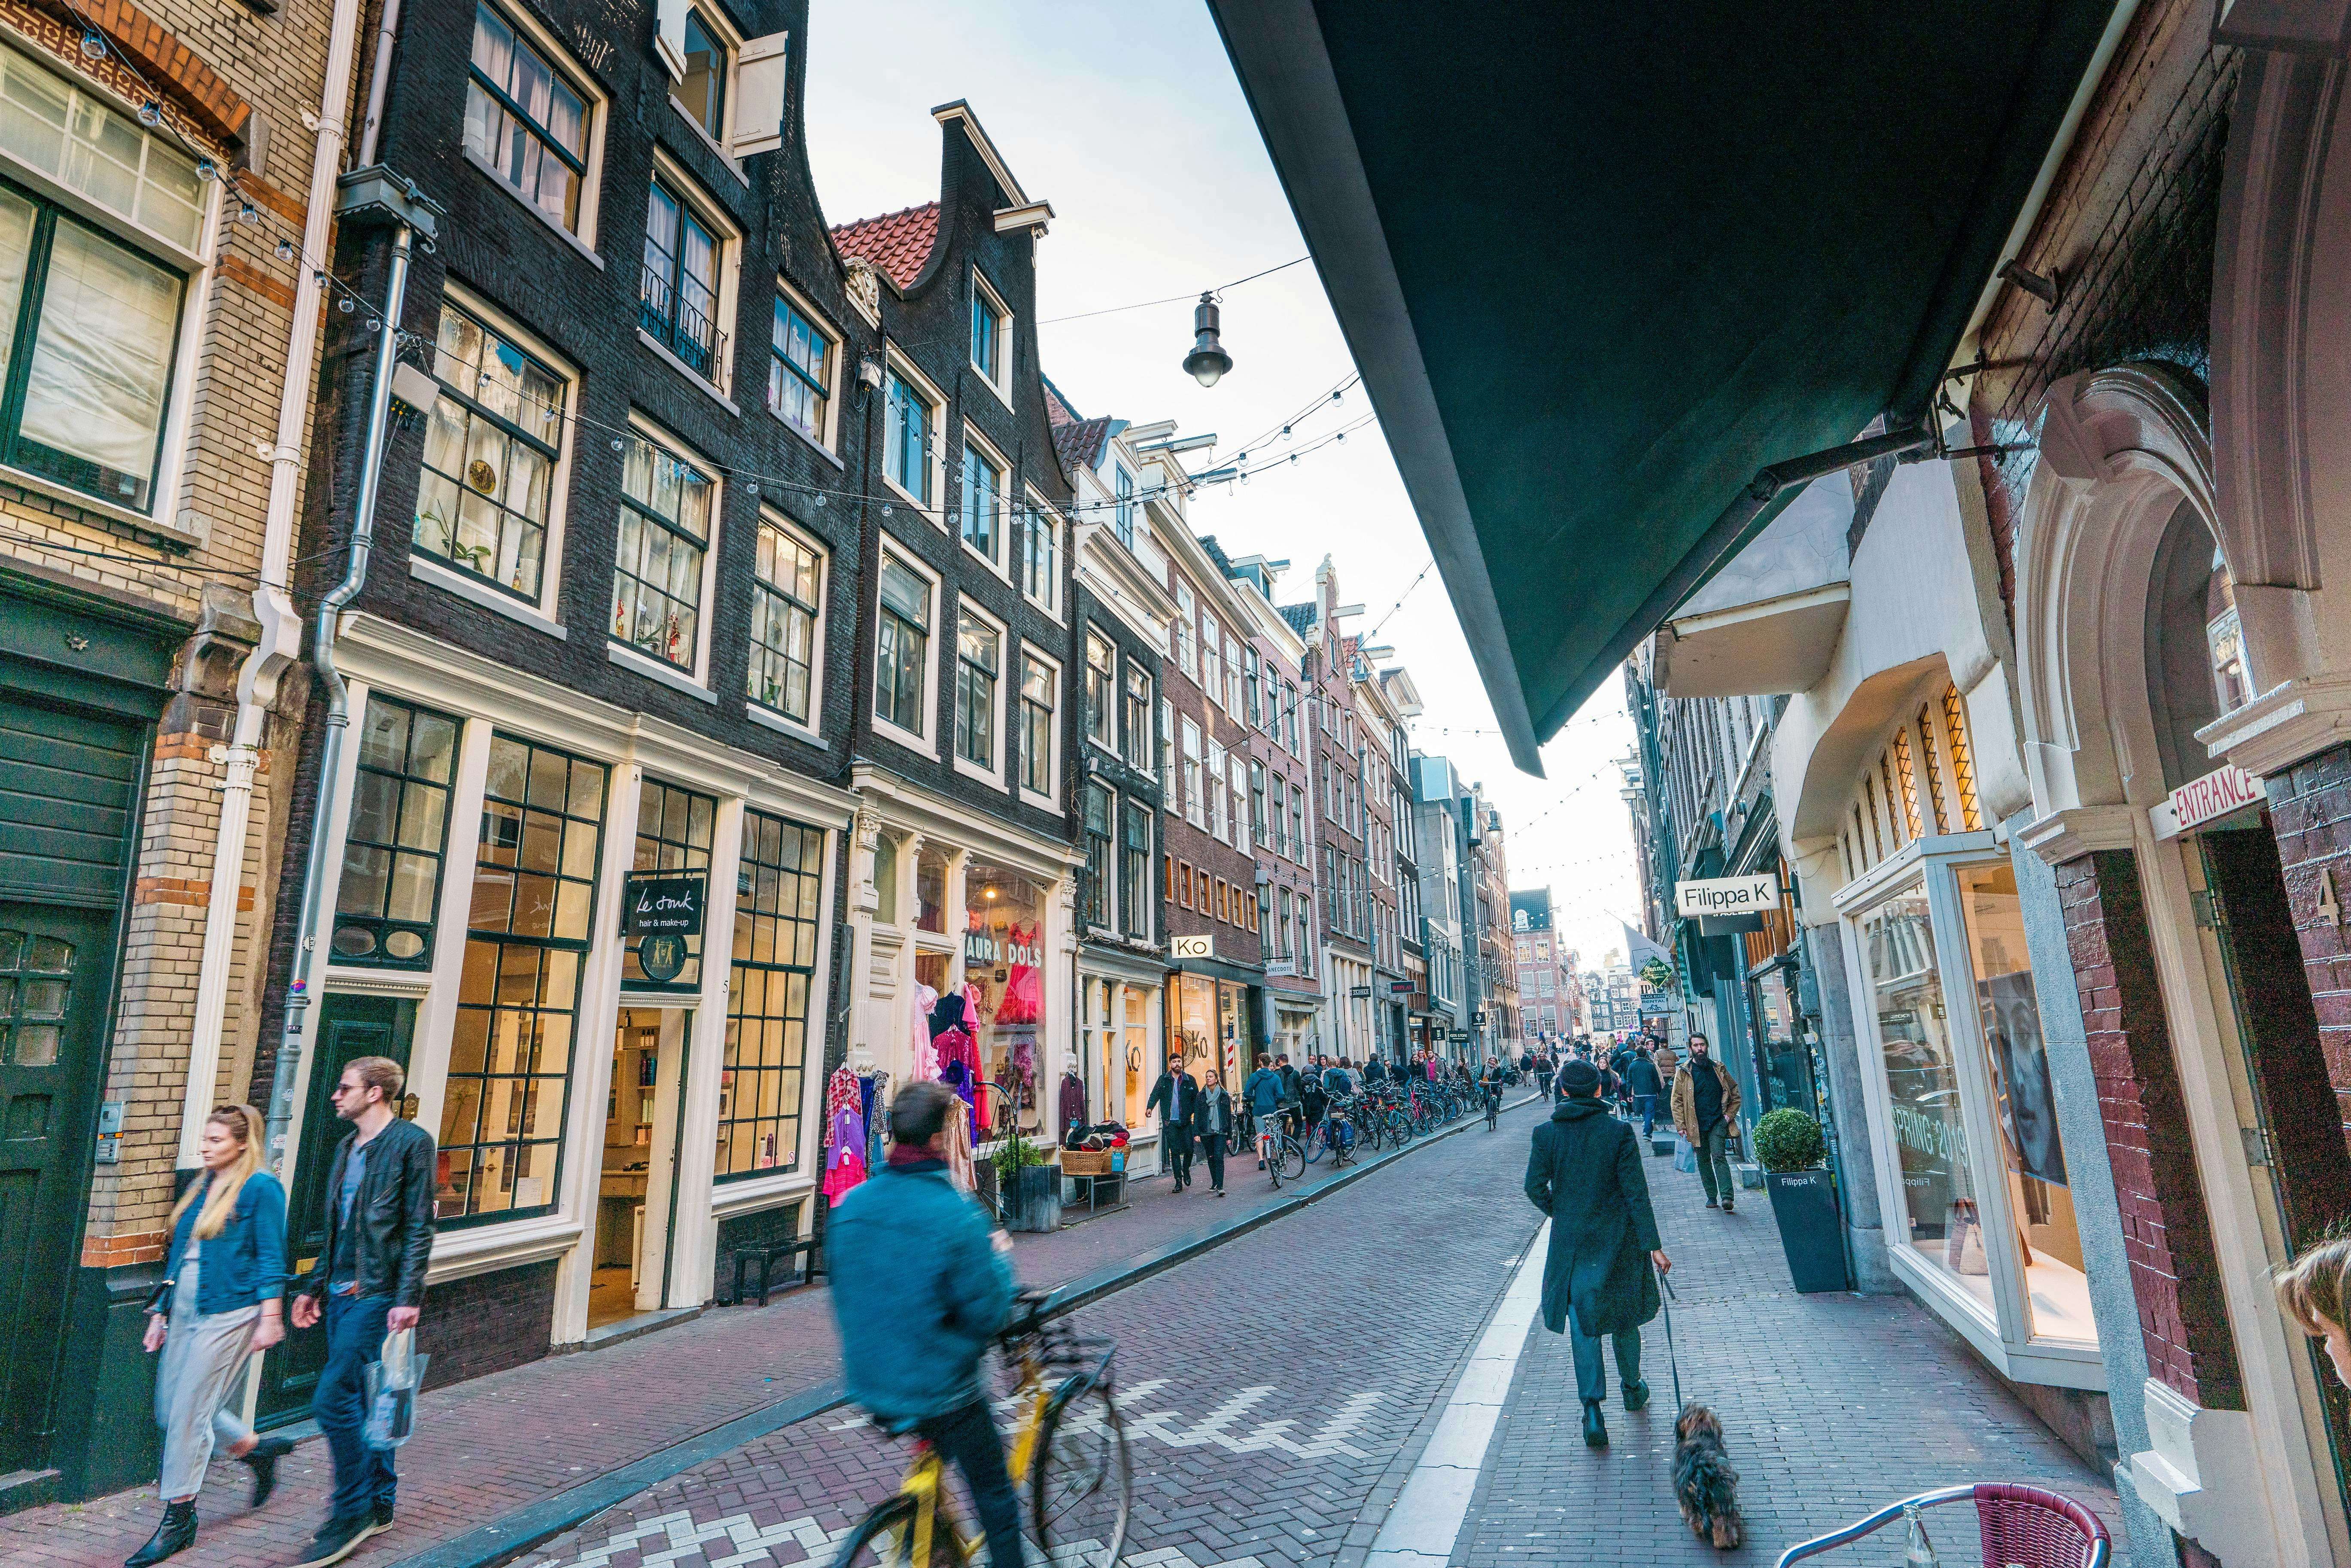 Pedestrianised shopping street in Amsterdam